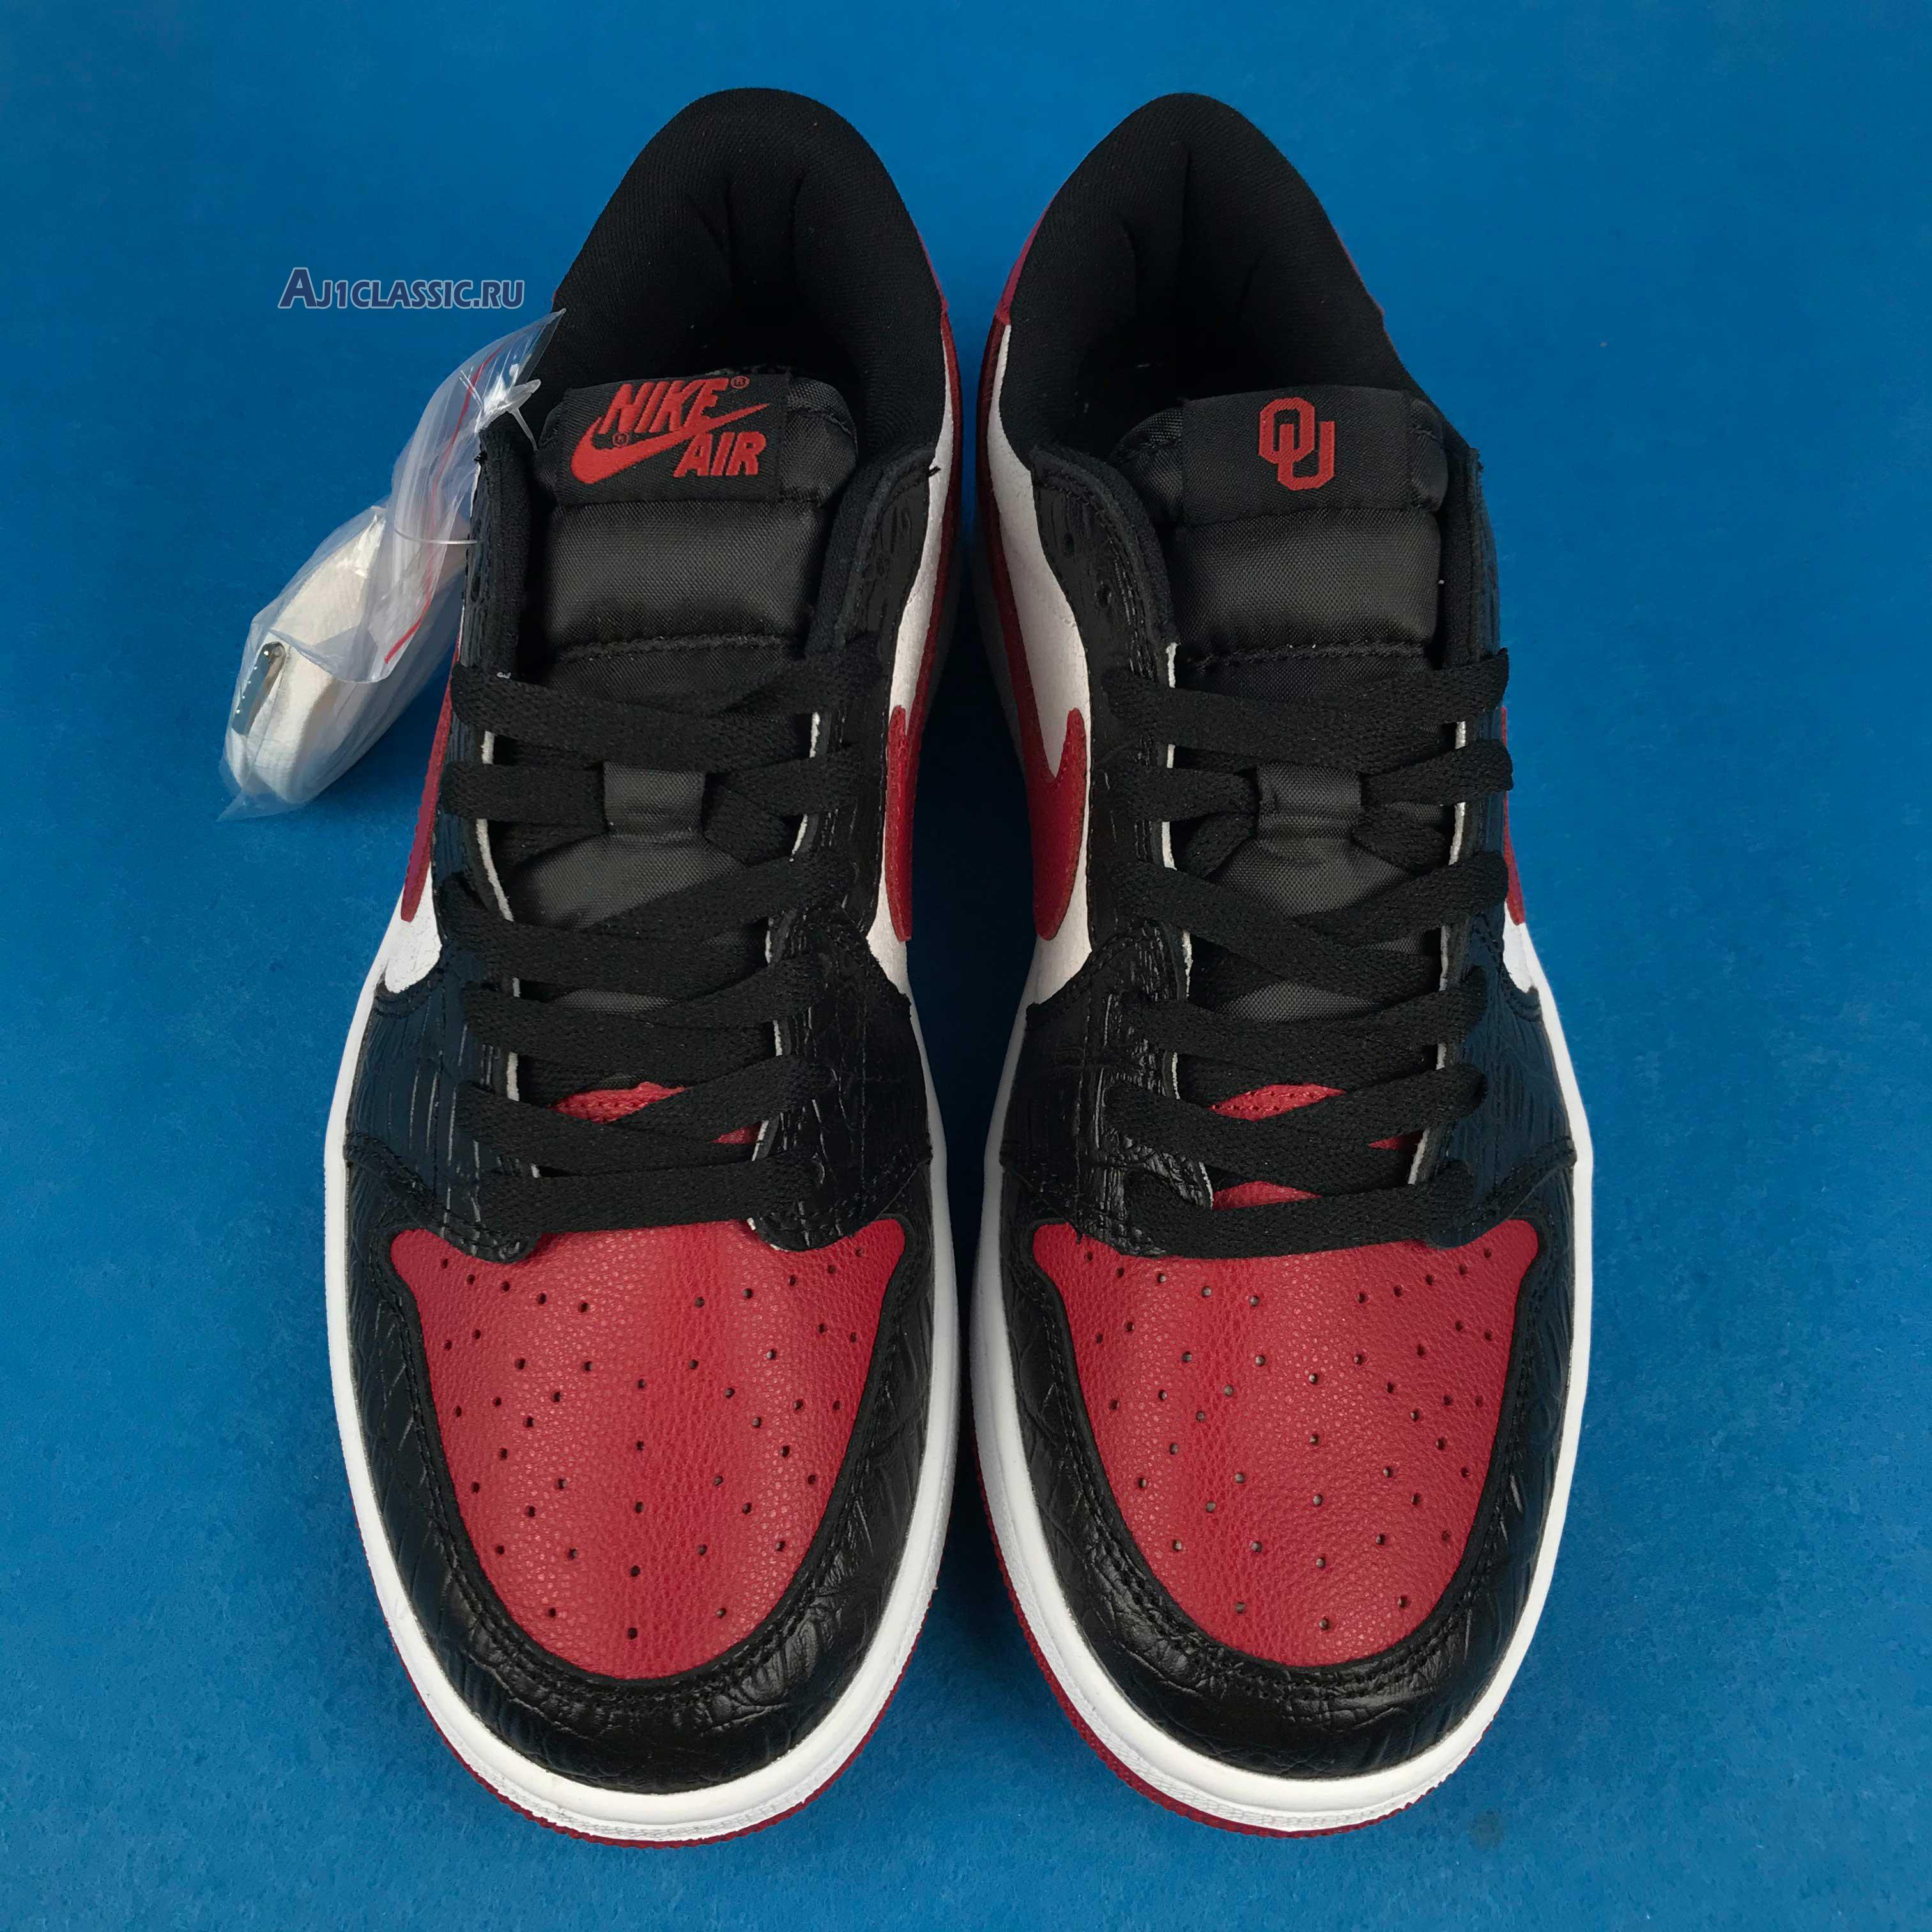 Air Jordan 1 Low Gym Red - Black CW0192-200 Gym Red/Black-White Sneakers